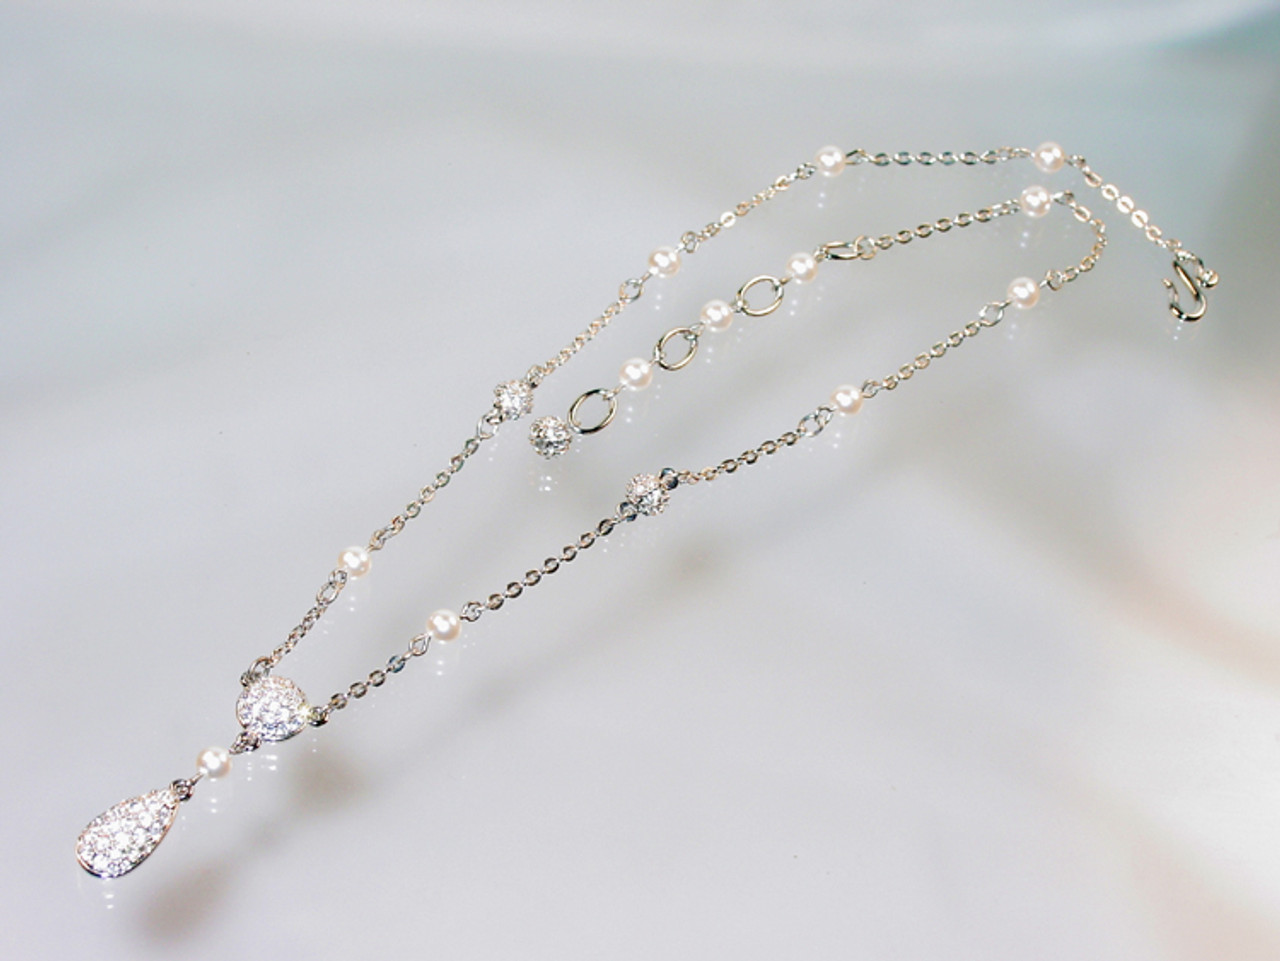 Vintage Swarovski Crystal Pendant Necklace